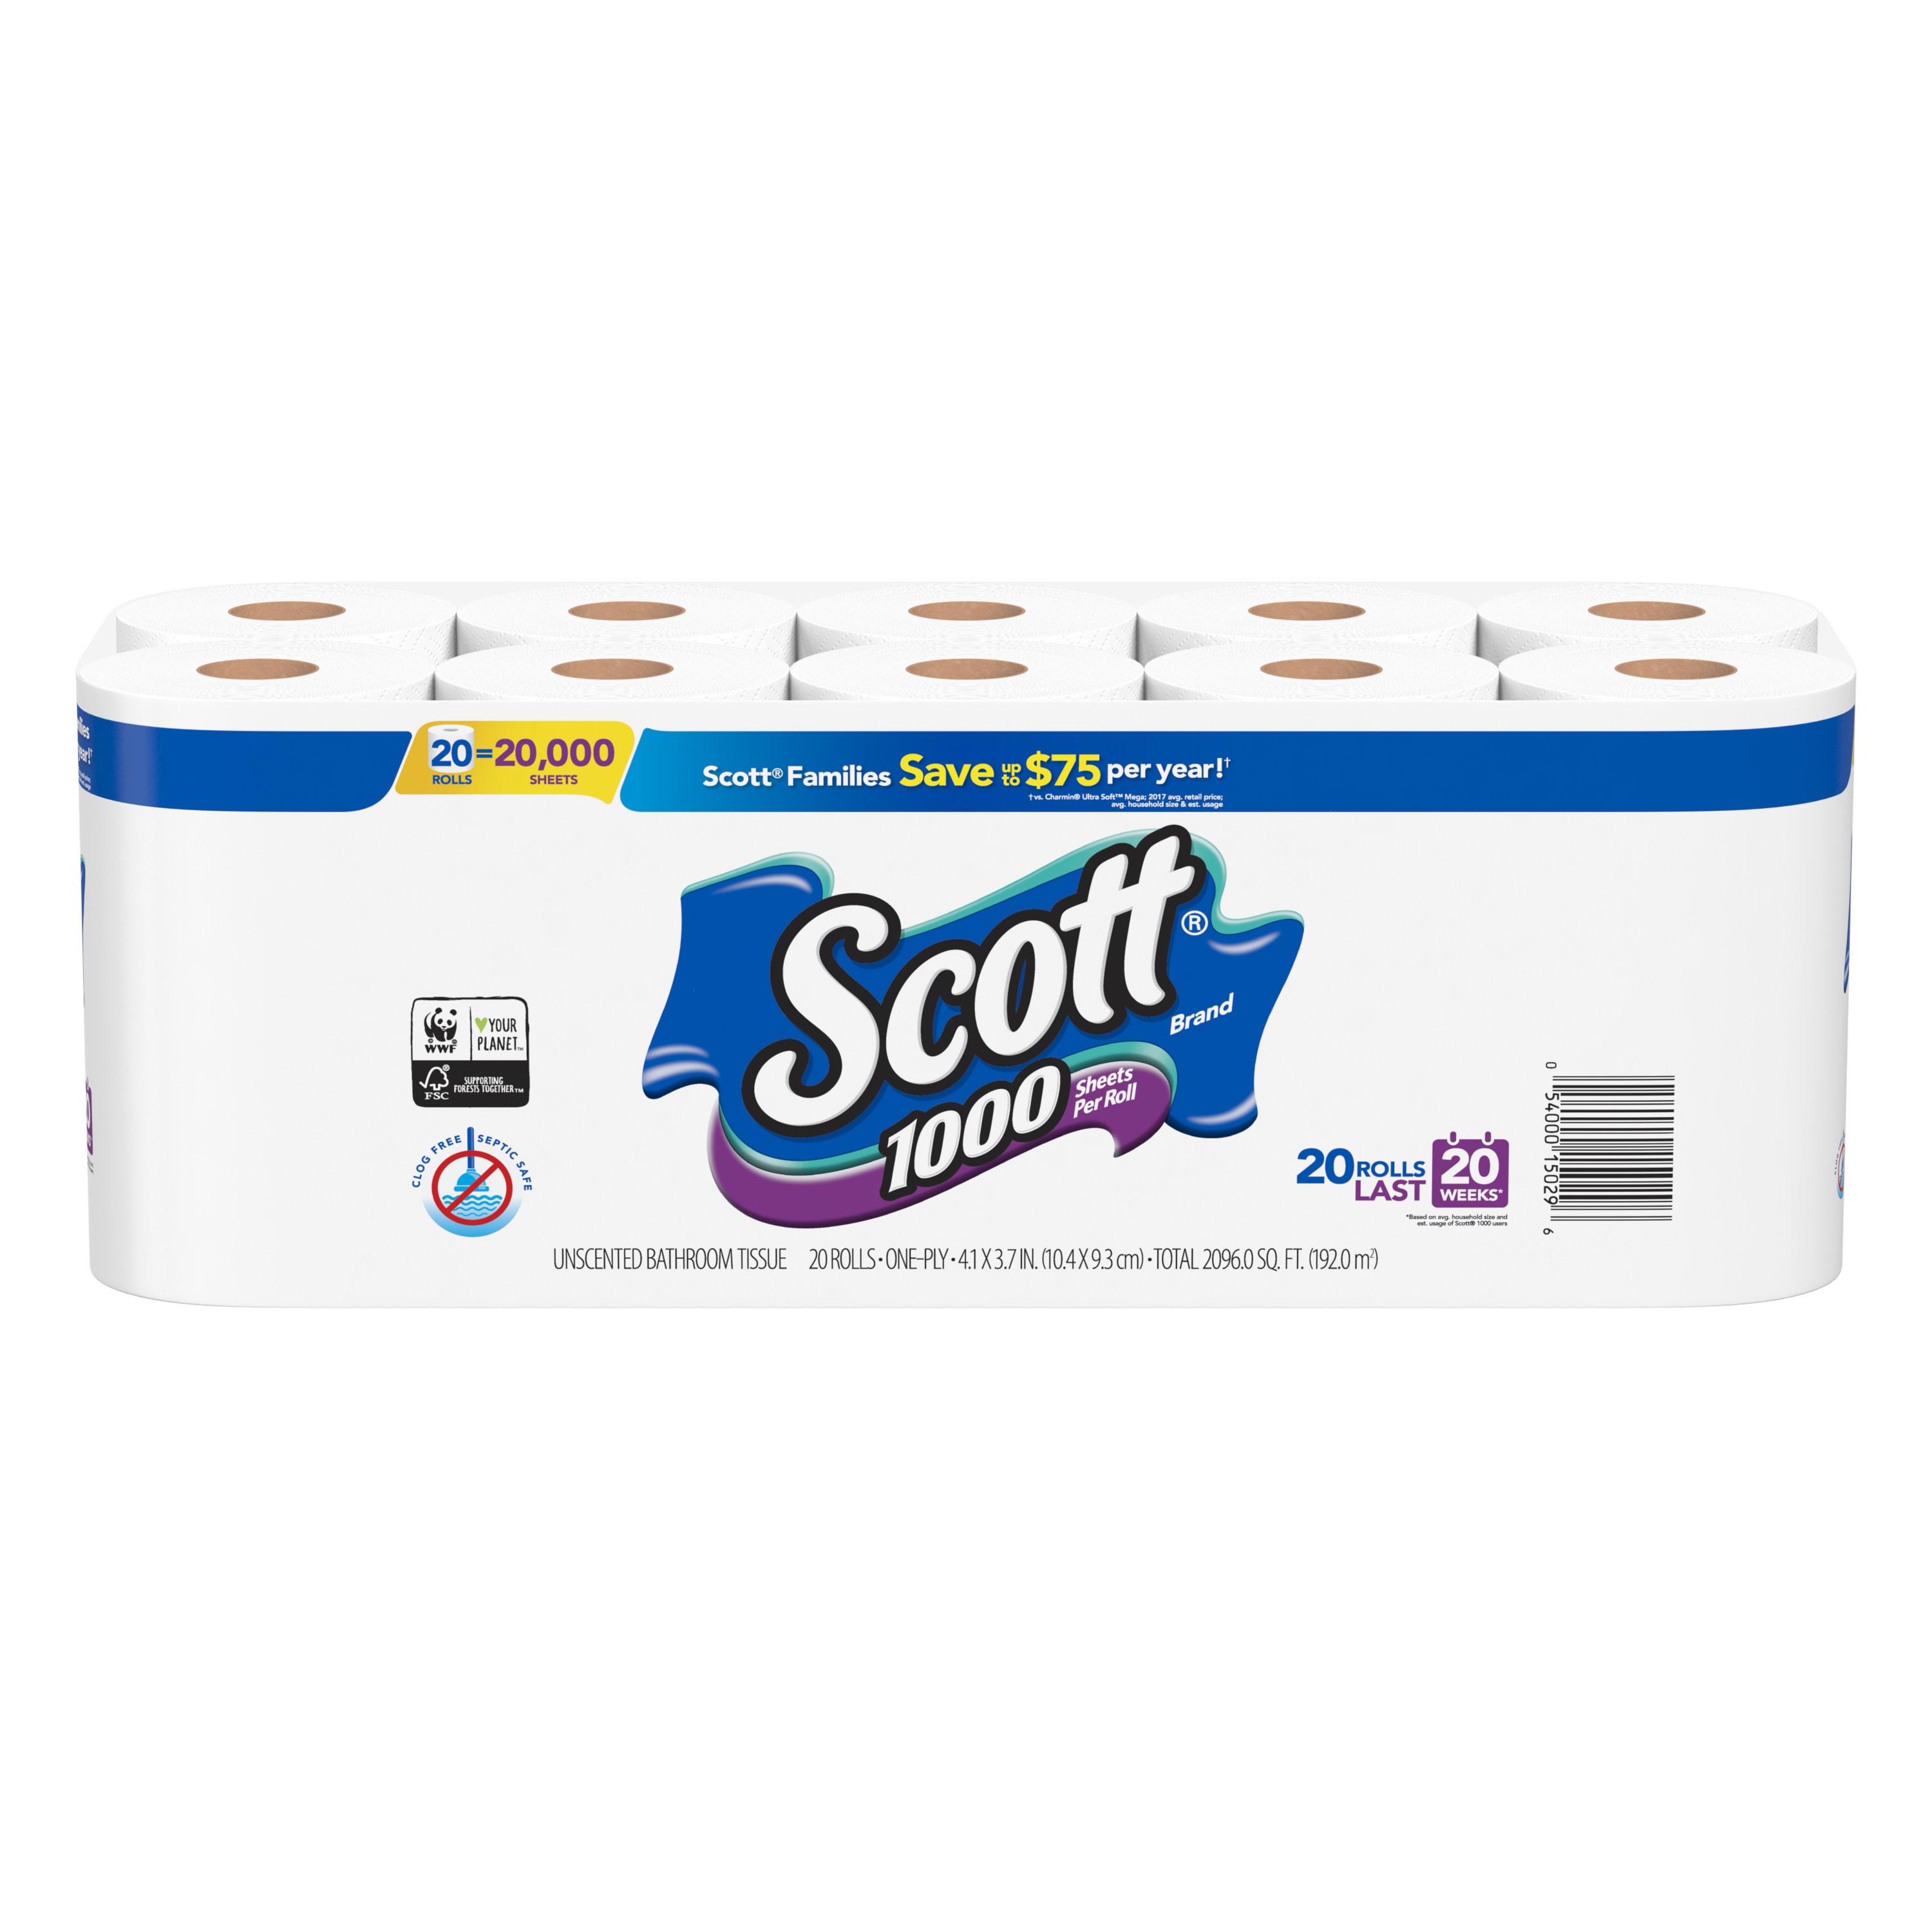 Scott 1000 Toilet Paper, 20 Rolls, 1,000 Sheets Per Roll (20,000 Total) - image 1 of 8